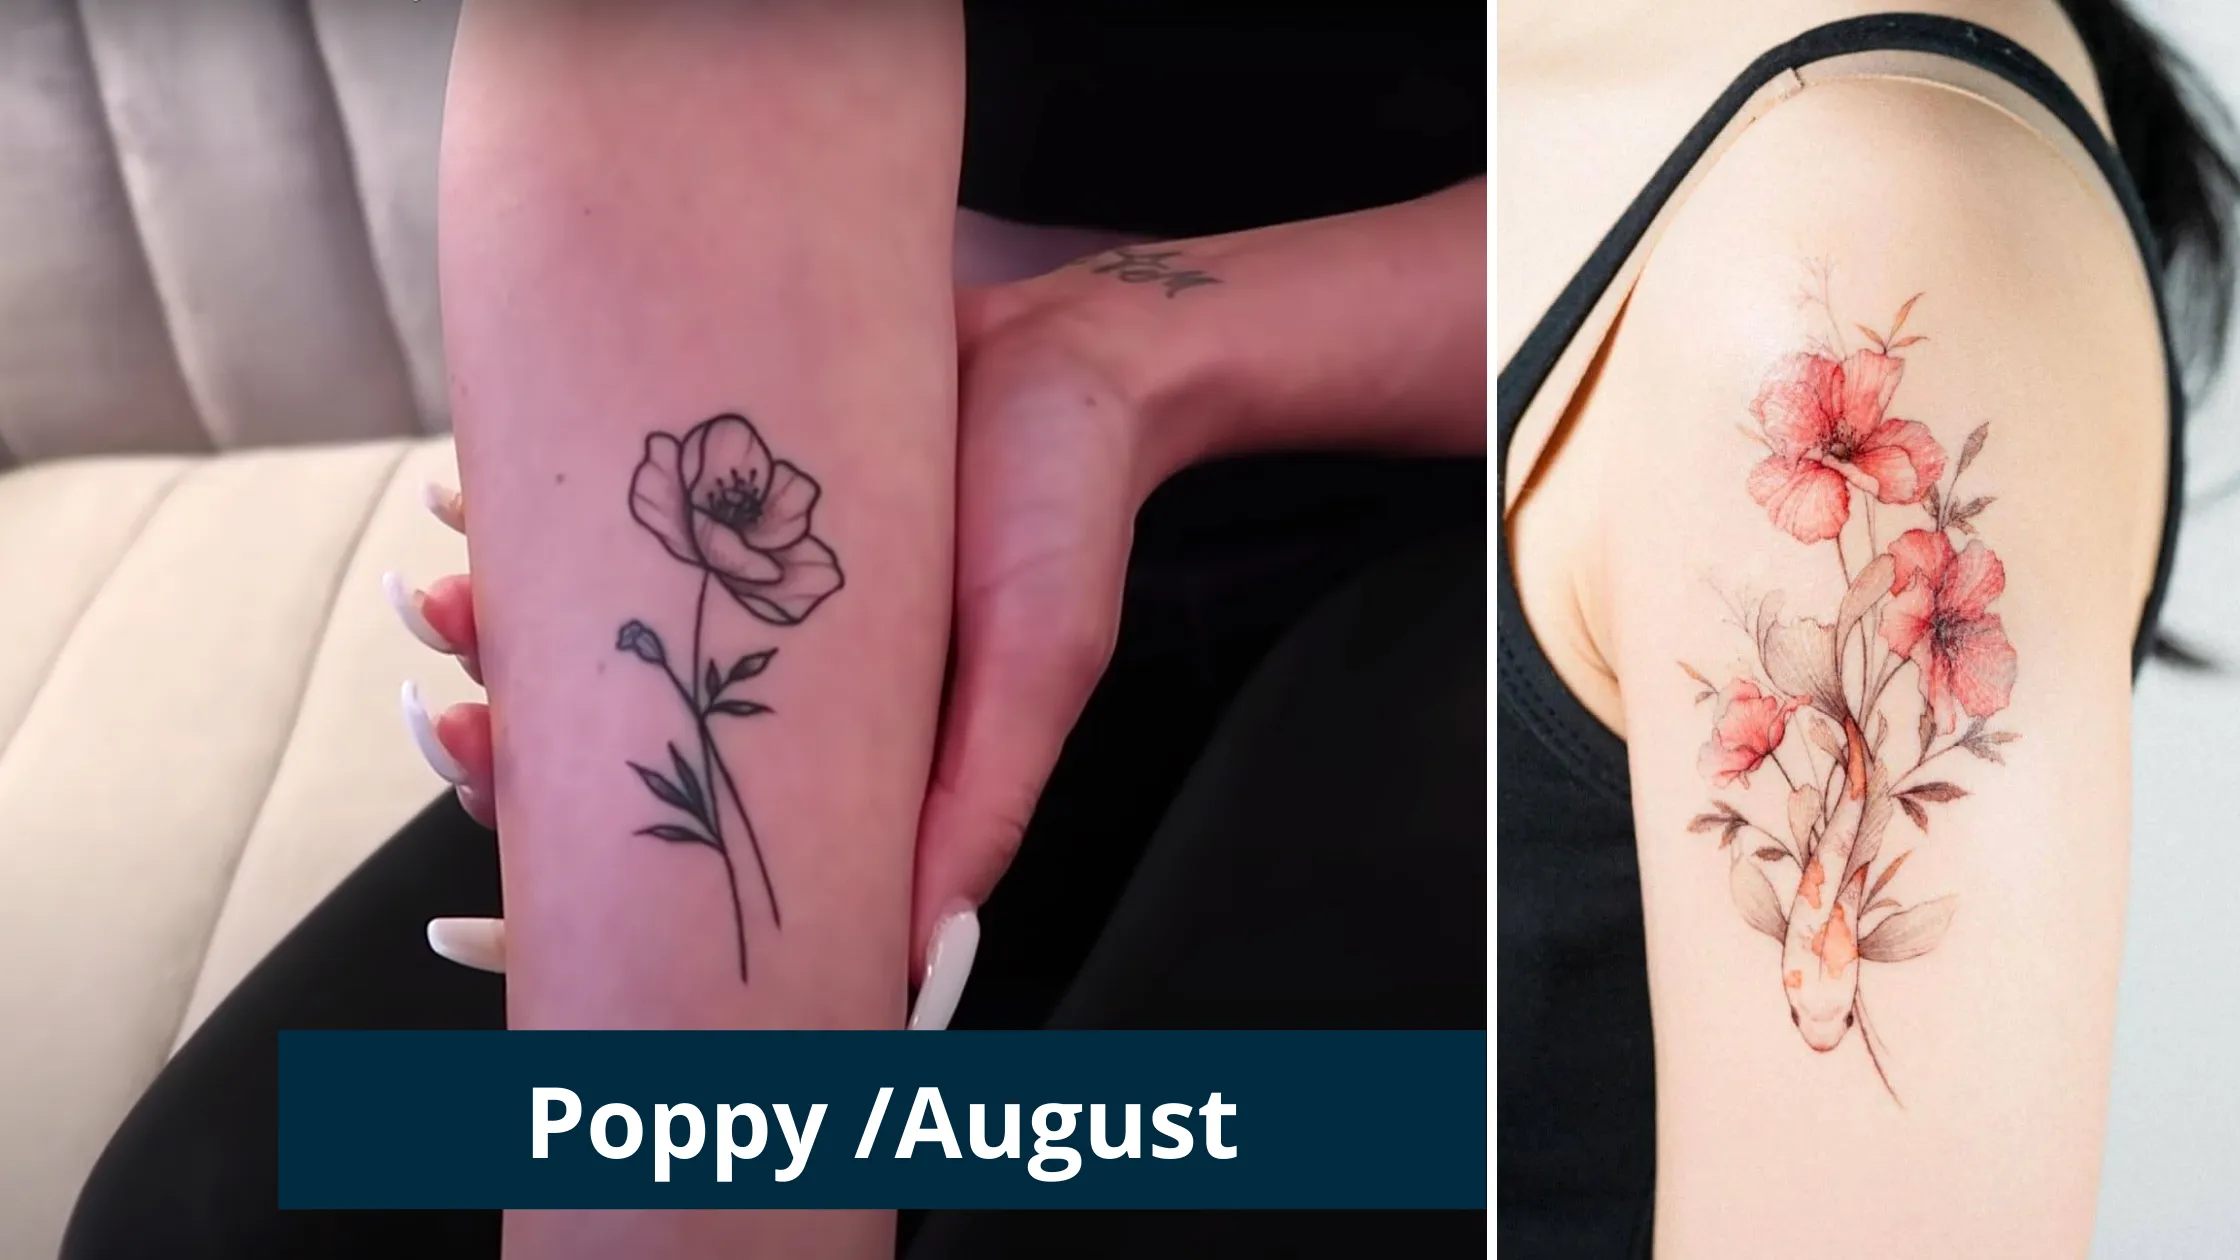 Birth flowers tattoo ideas 2021 - Poppy August